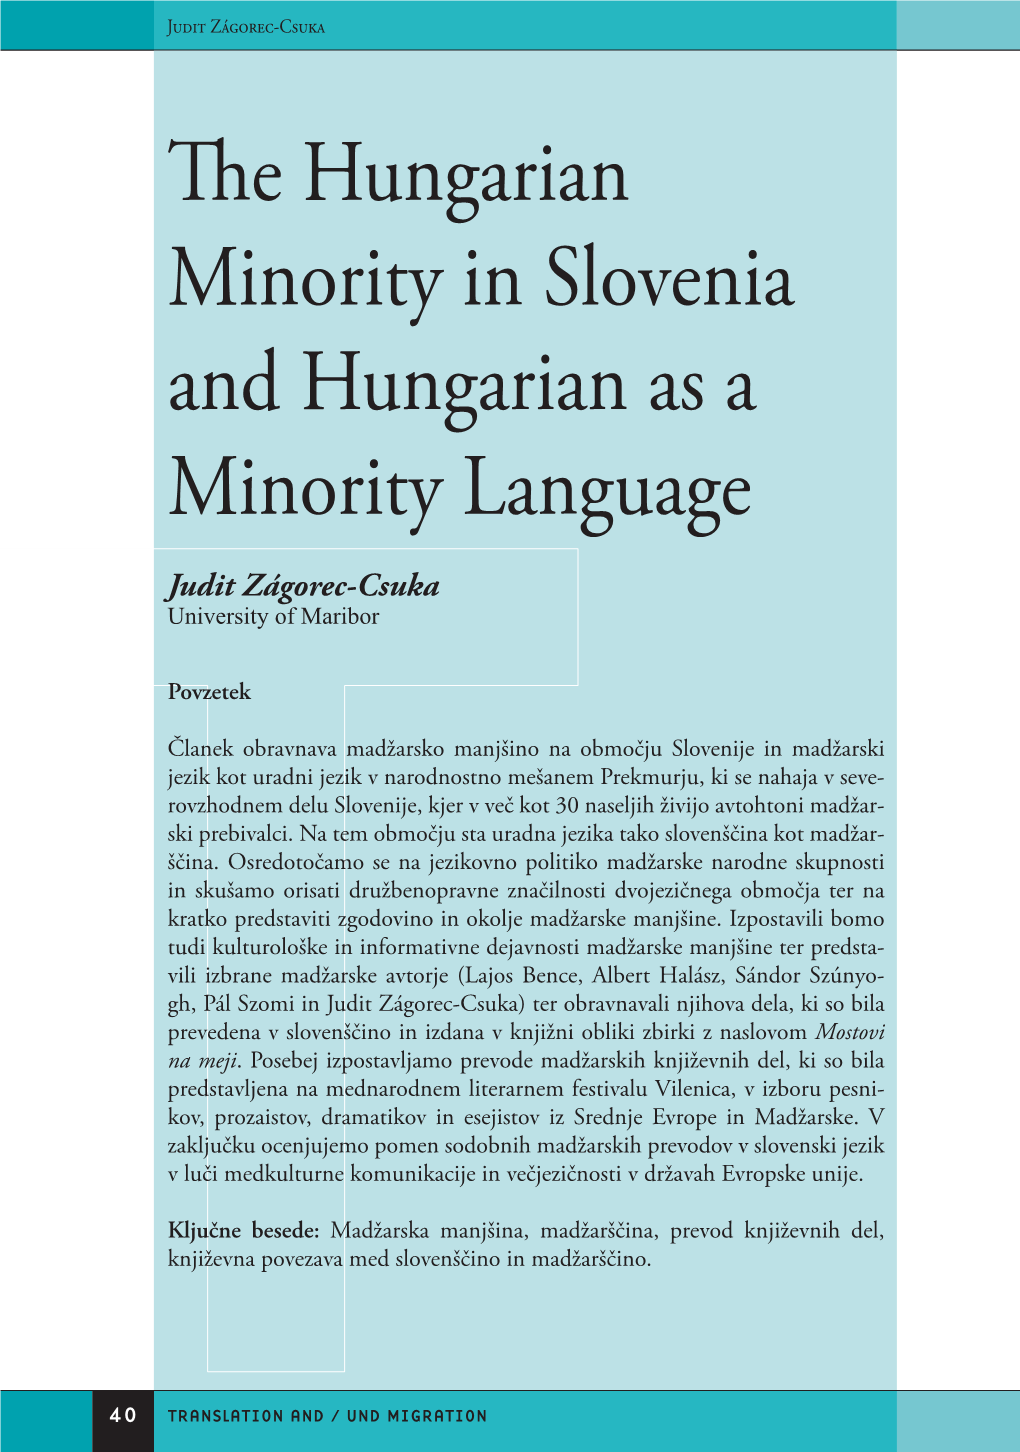 Judit Zágorec-Csuka: "The Hungarian Minority in Slovenia and Hungarian